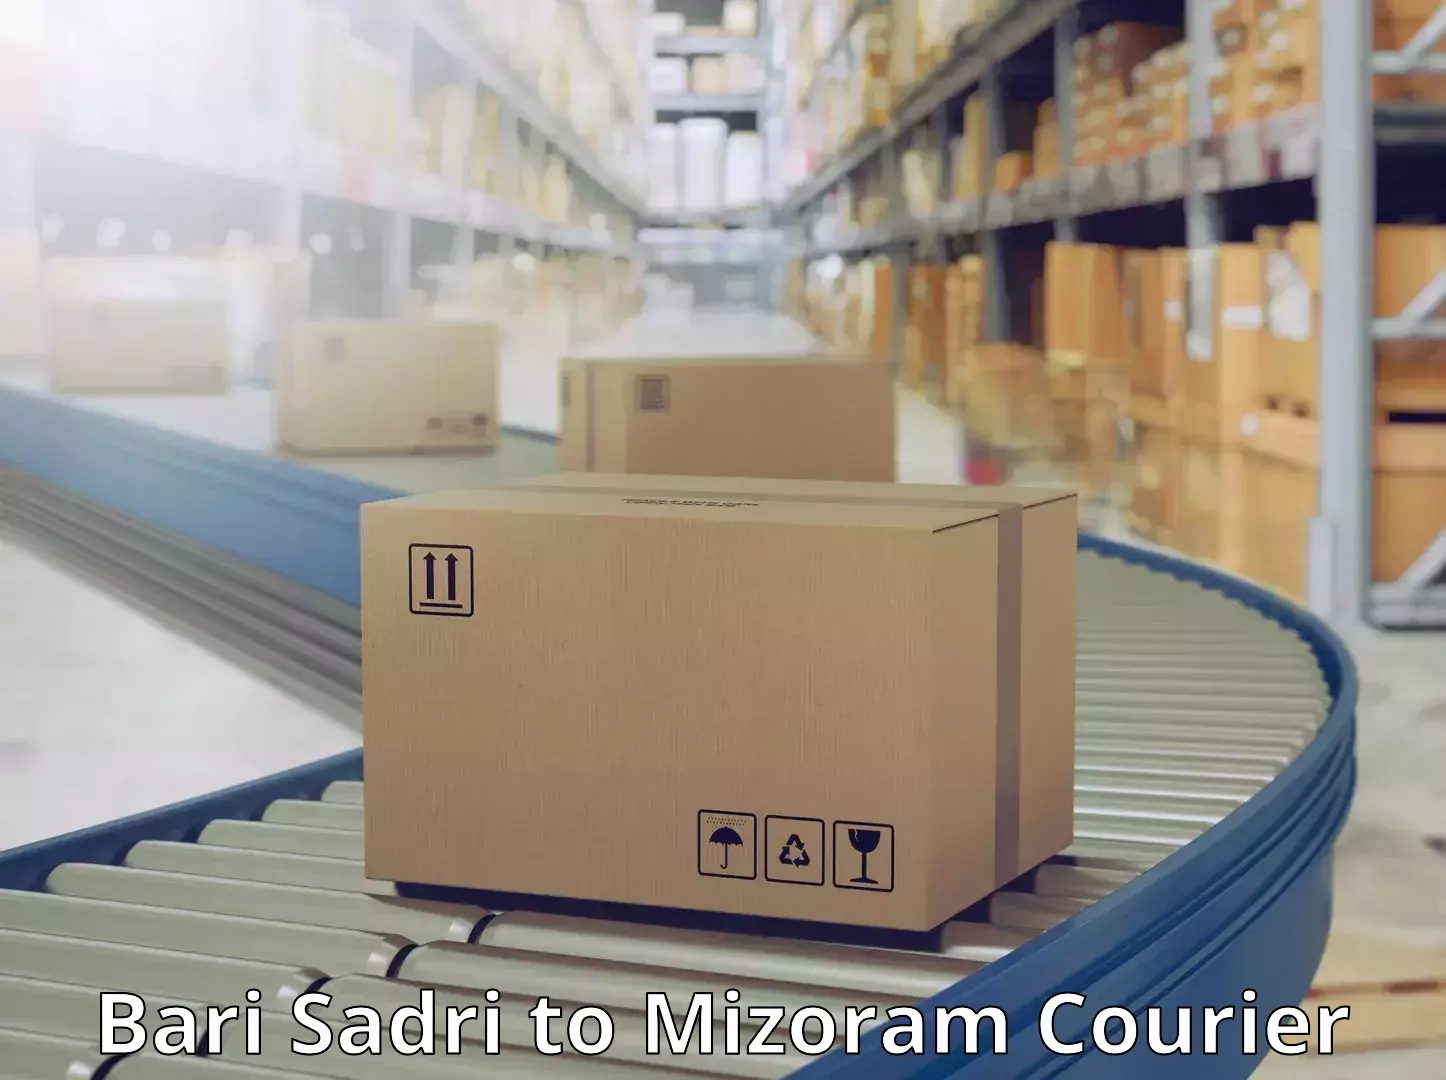 Doorstep delivery service Bari Sadri to Mizoram